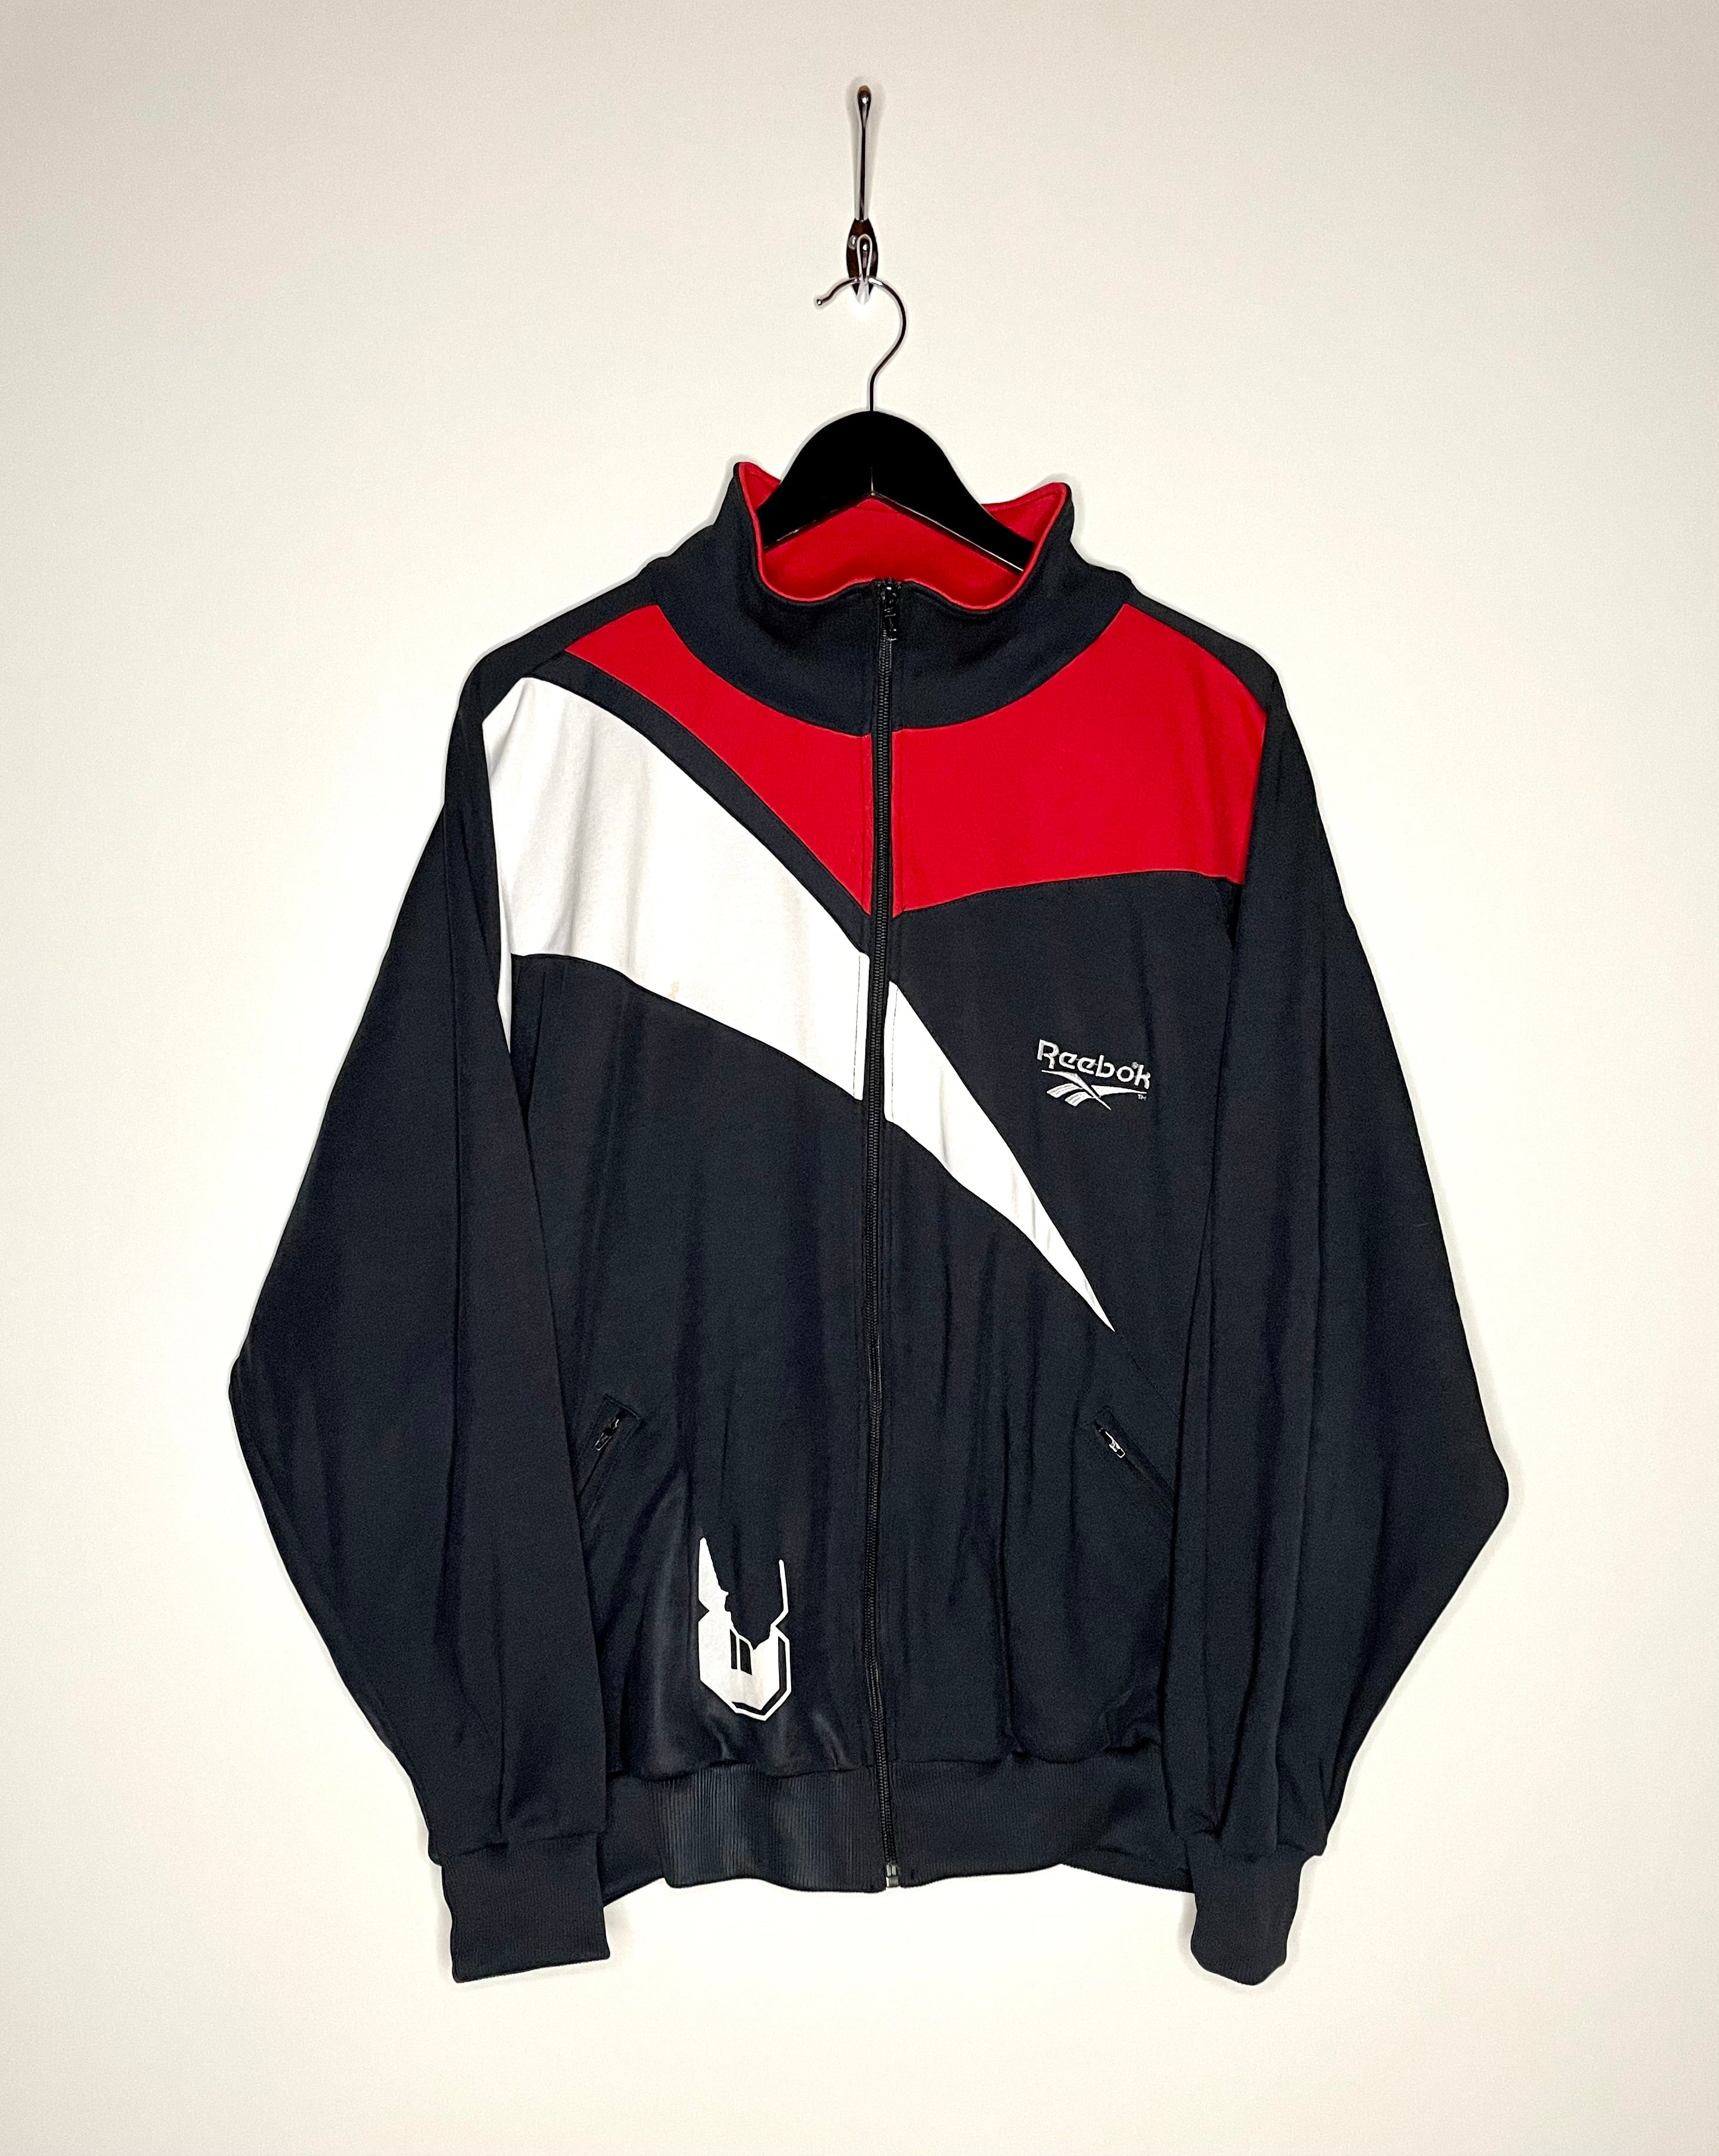 Reebok vintage training jacket dark blue/red size XL